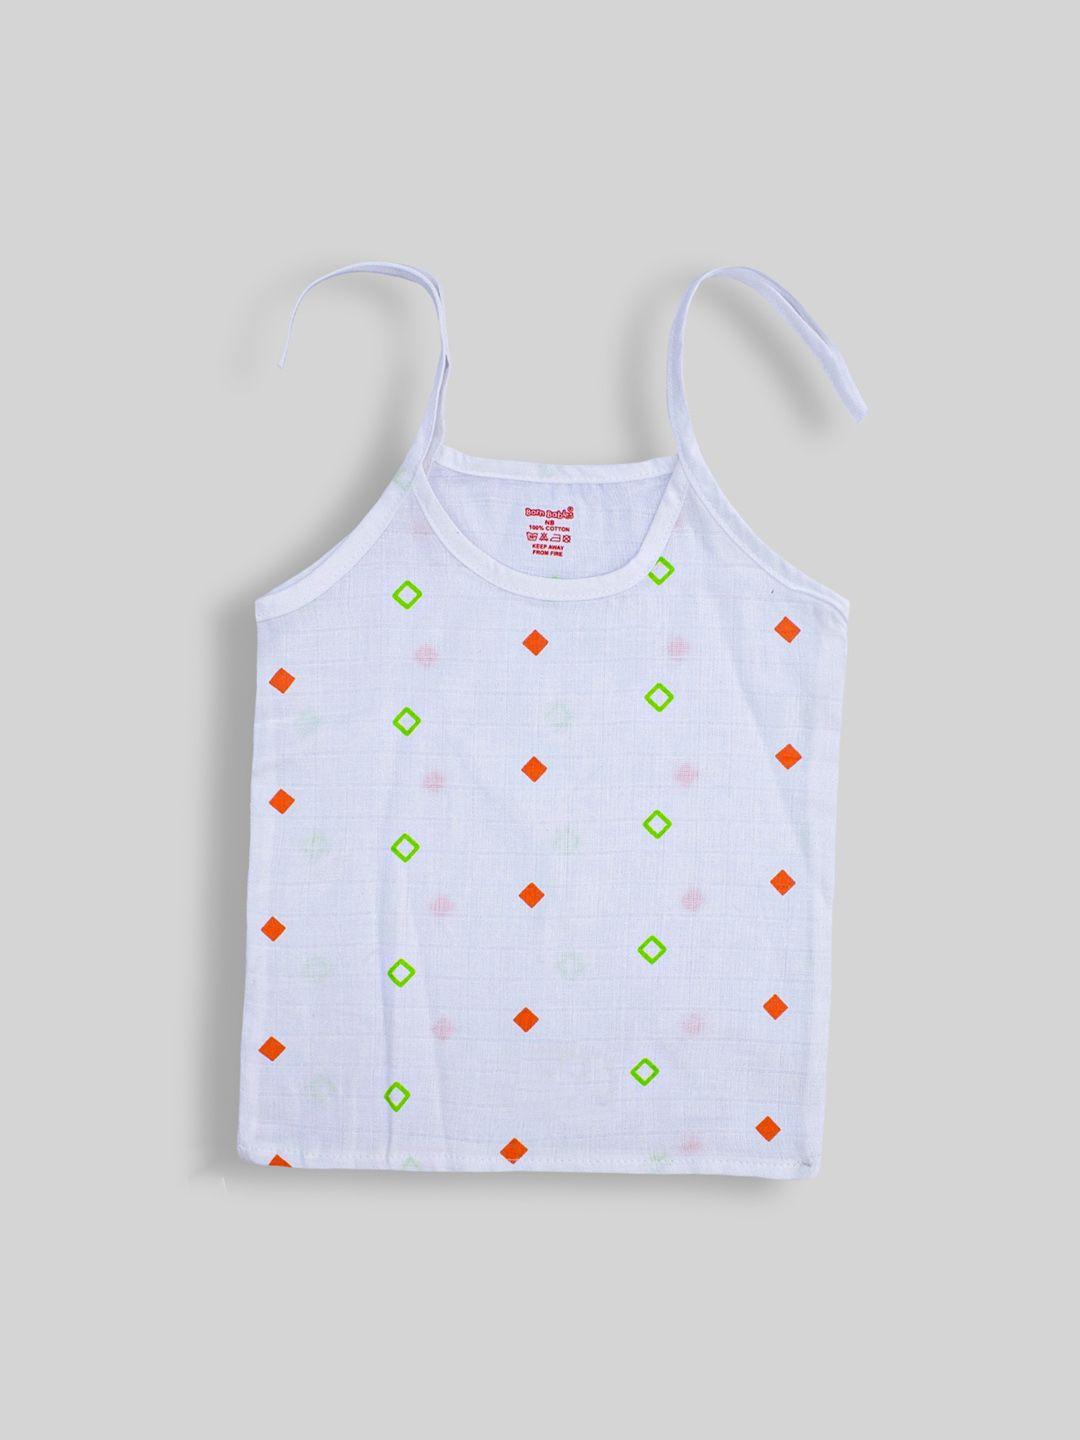 born babies printed cotton sleeveless jablas vests